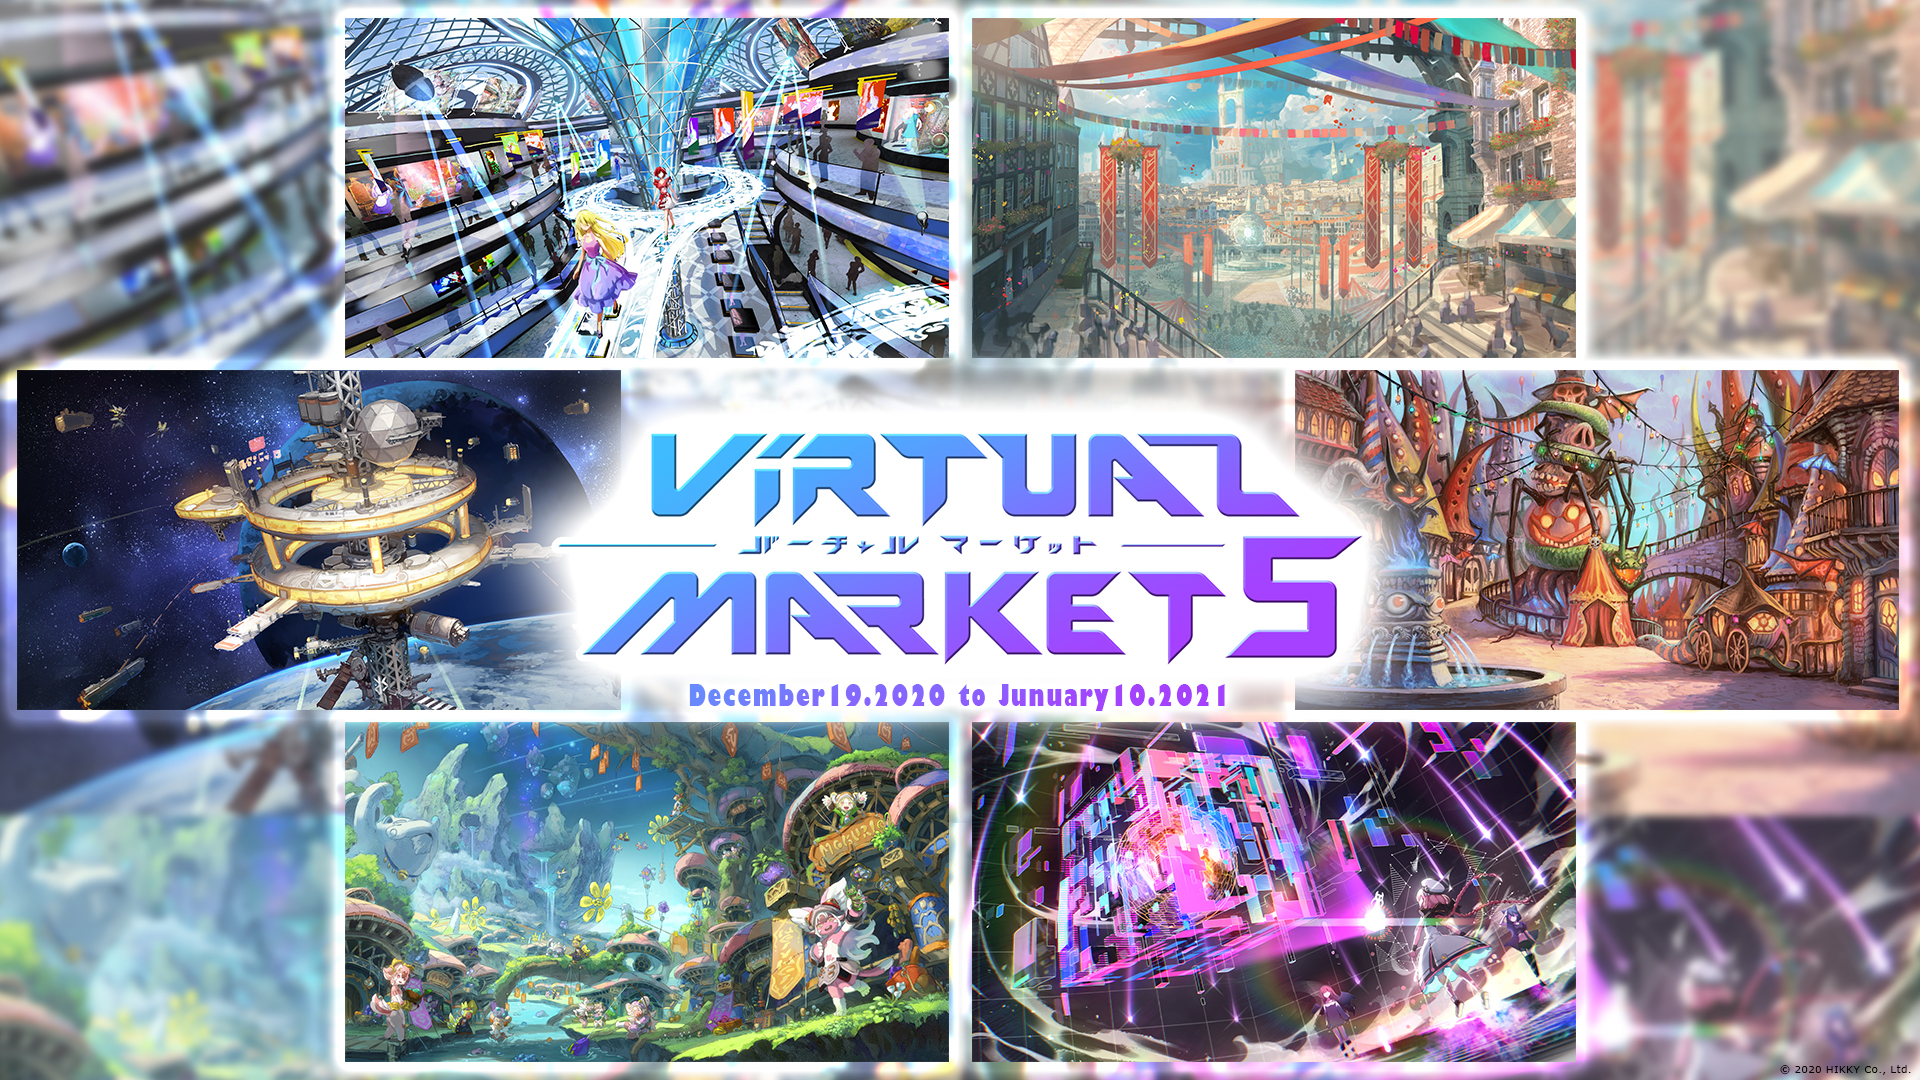 Vrイベント Virtual Market 5 一般出展に過去最多1 739サークルが応募 Game Watch